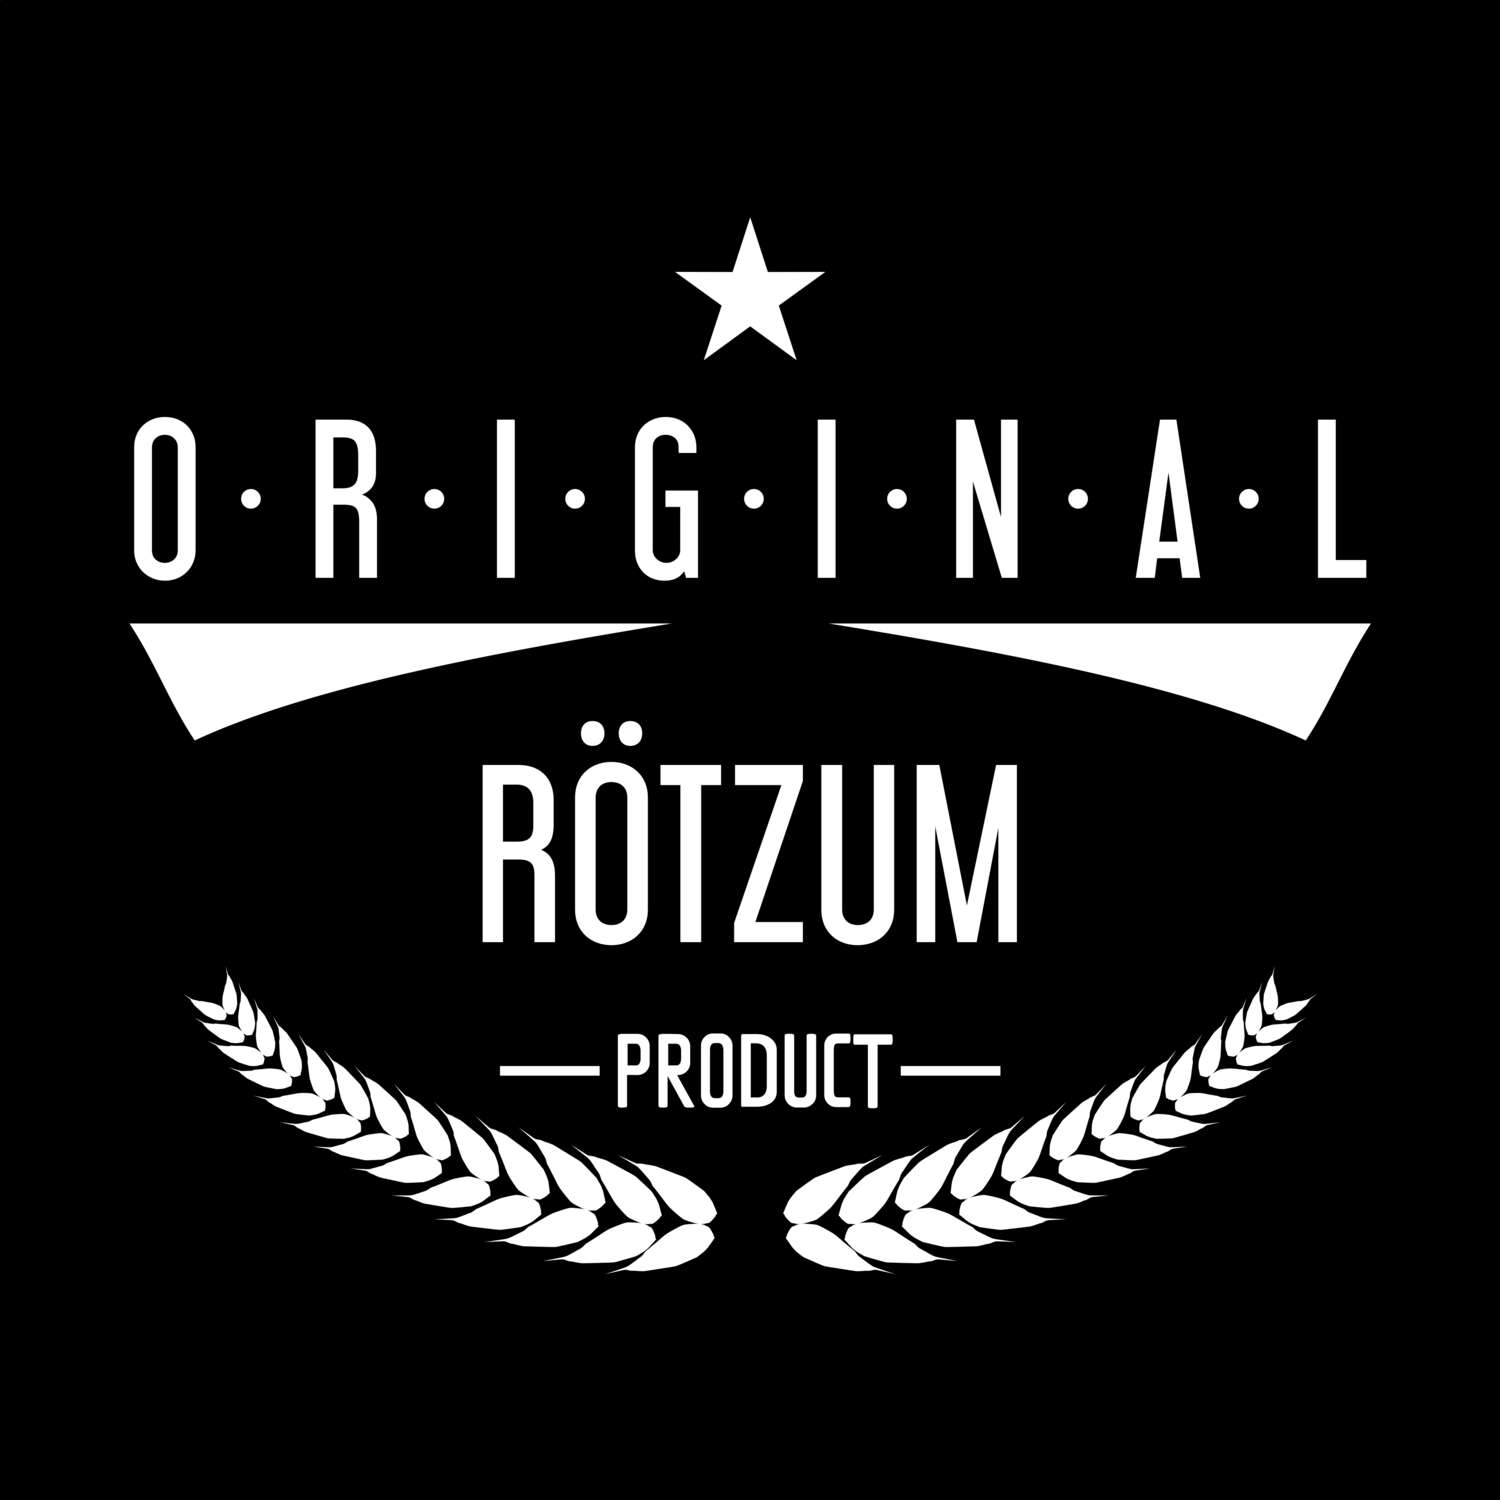 Rötzum T-Shirt »Original Product«